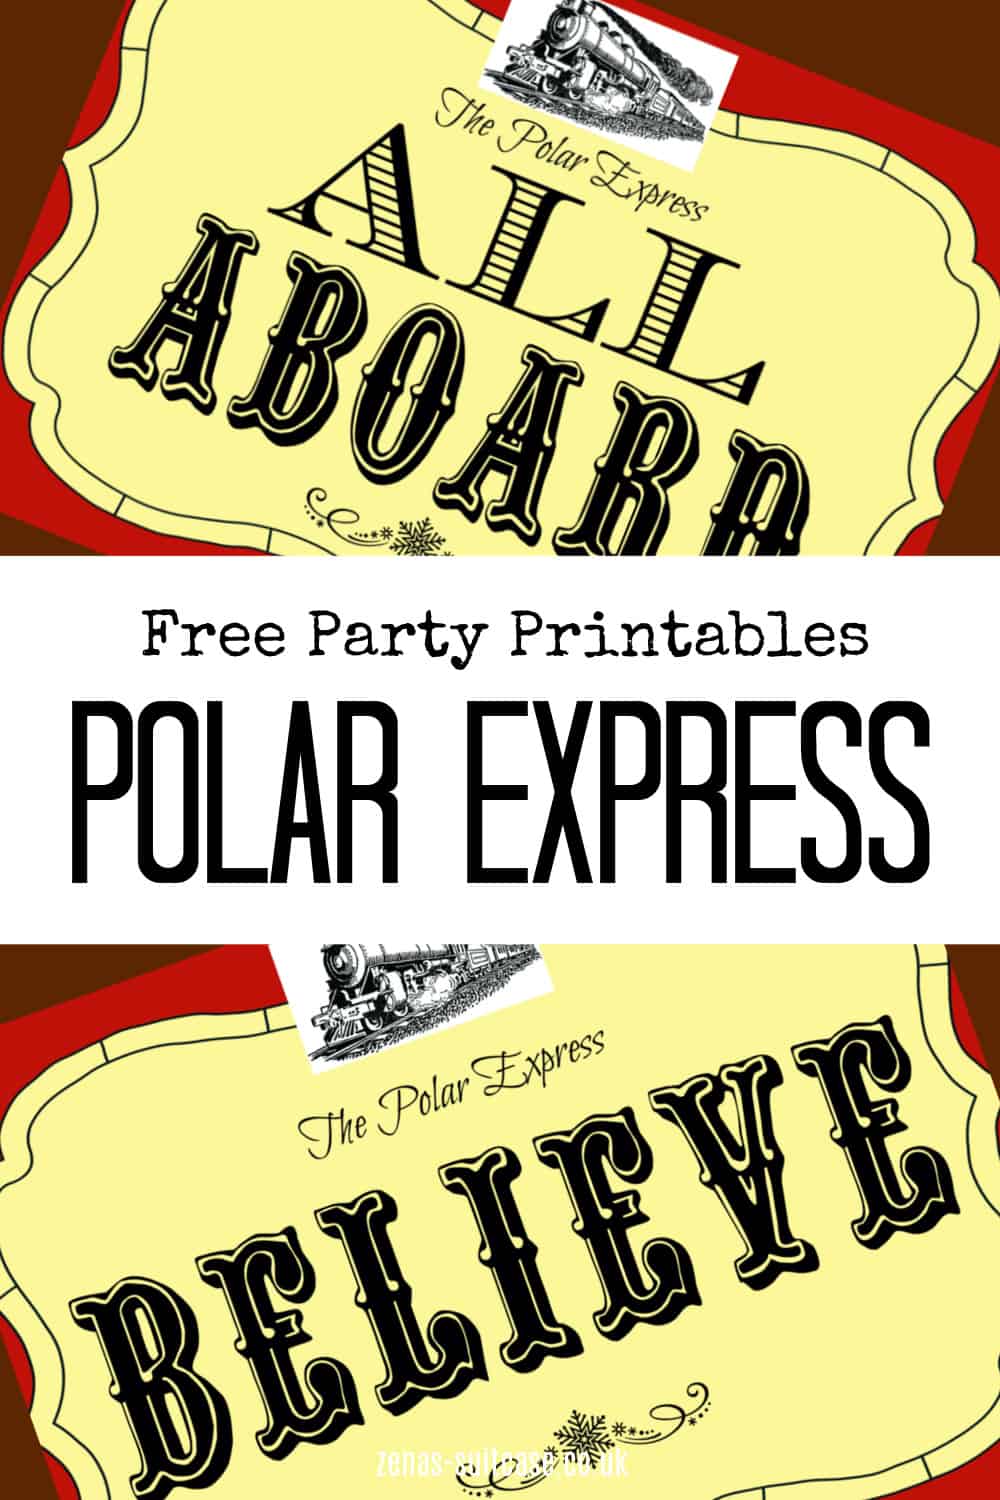  Free Polar Express Party Printables 